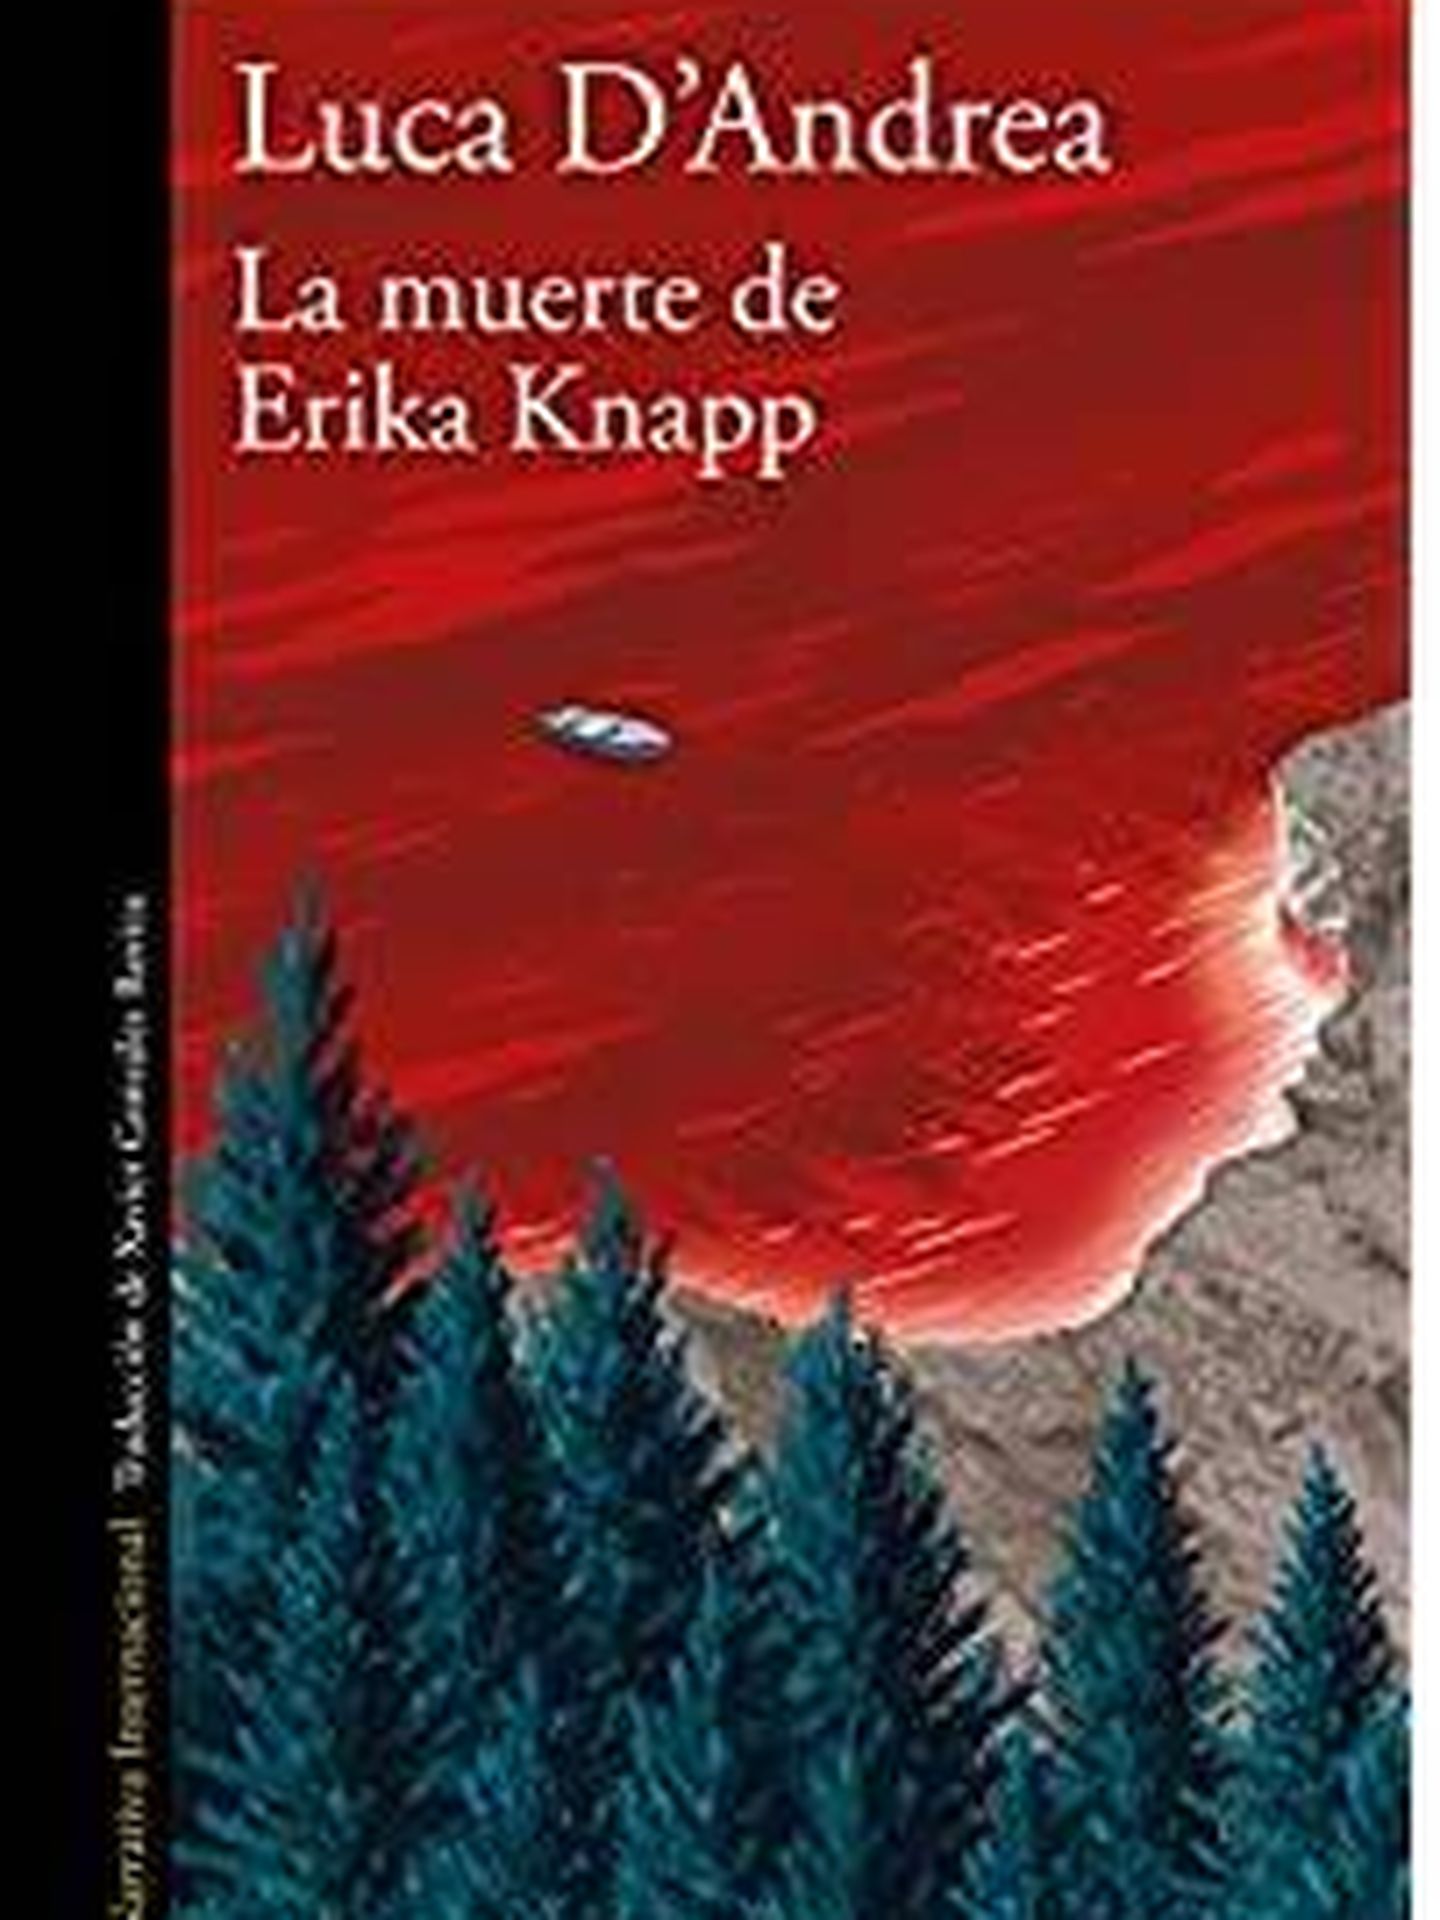 'La muerte de Erika Knapp' 